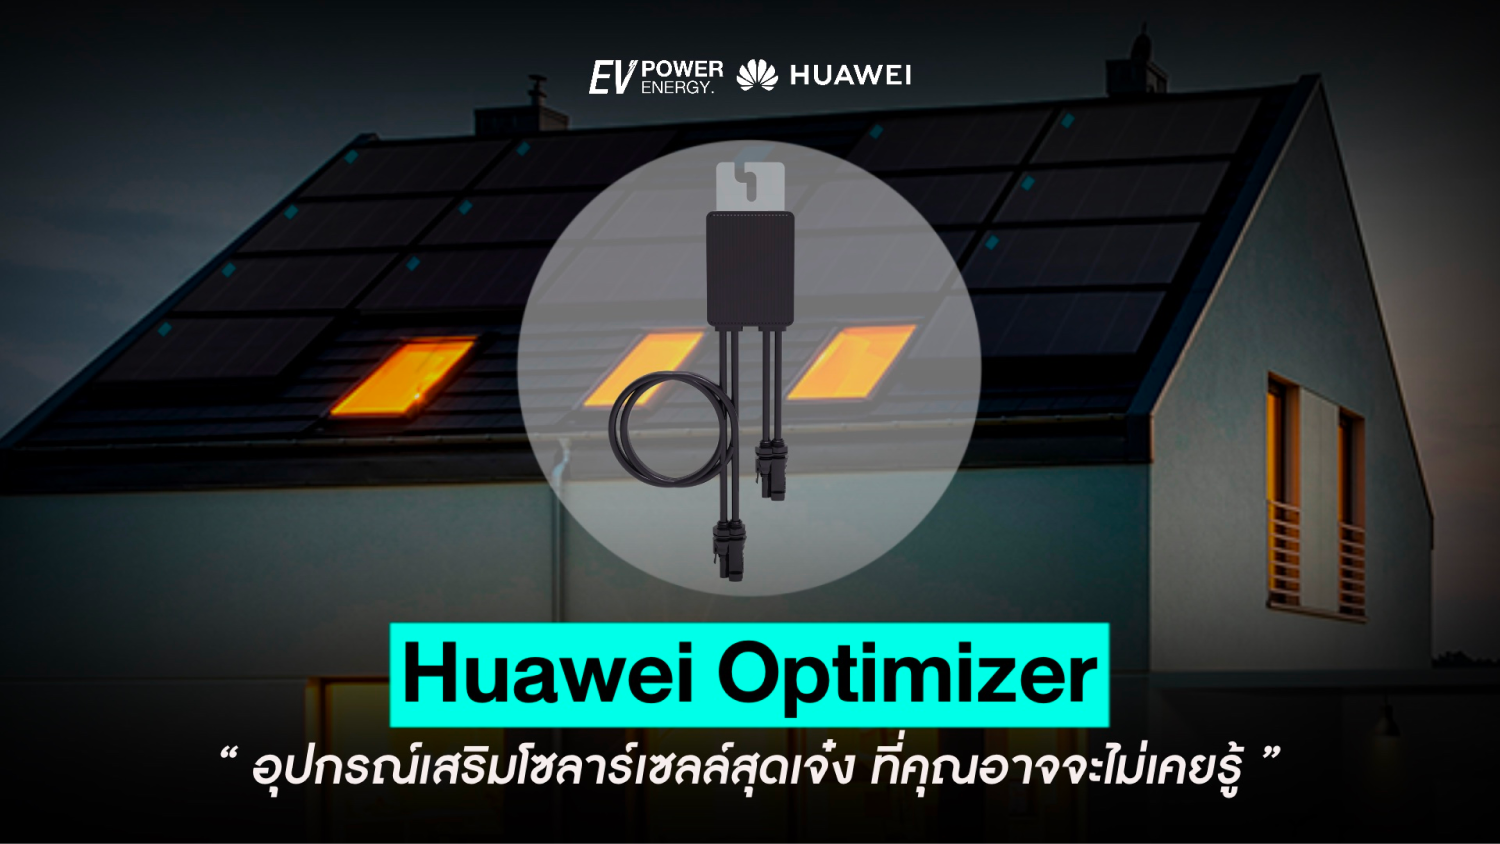 Huawei Optimizer อุปกรณ์สุดเจ๋งที่คุณอาจไม่เคยรู้